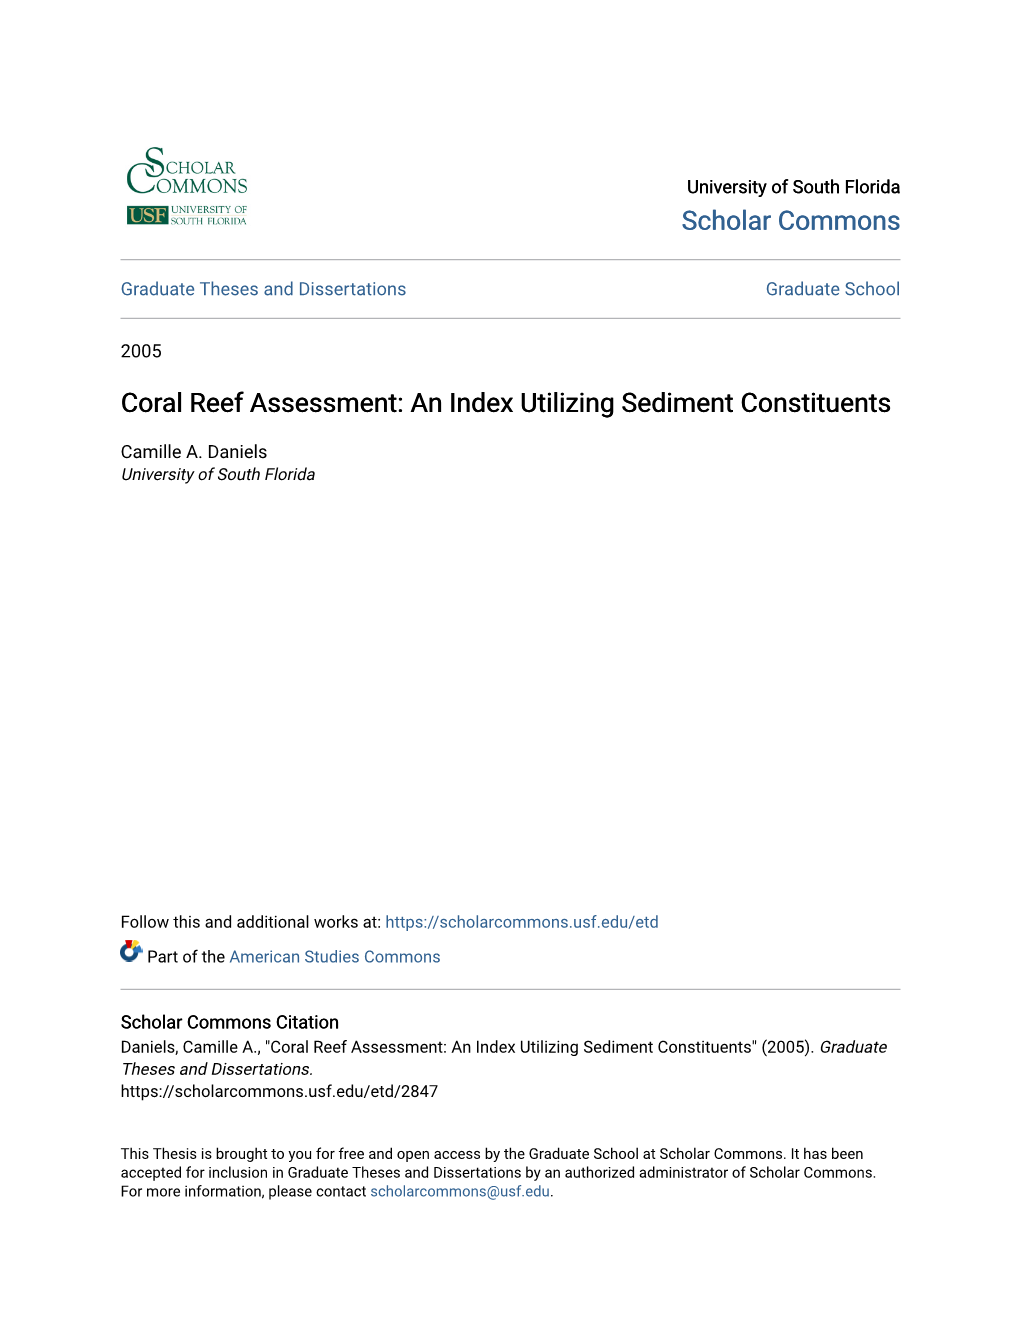 Coral Reef Assessment: an Index Utilizing Sediment Constituents